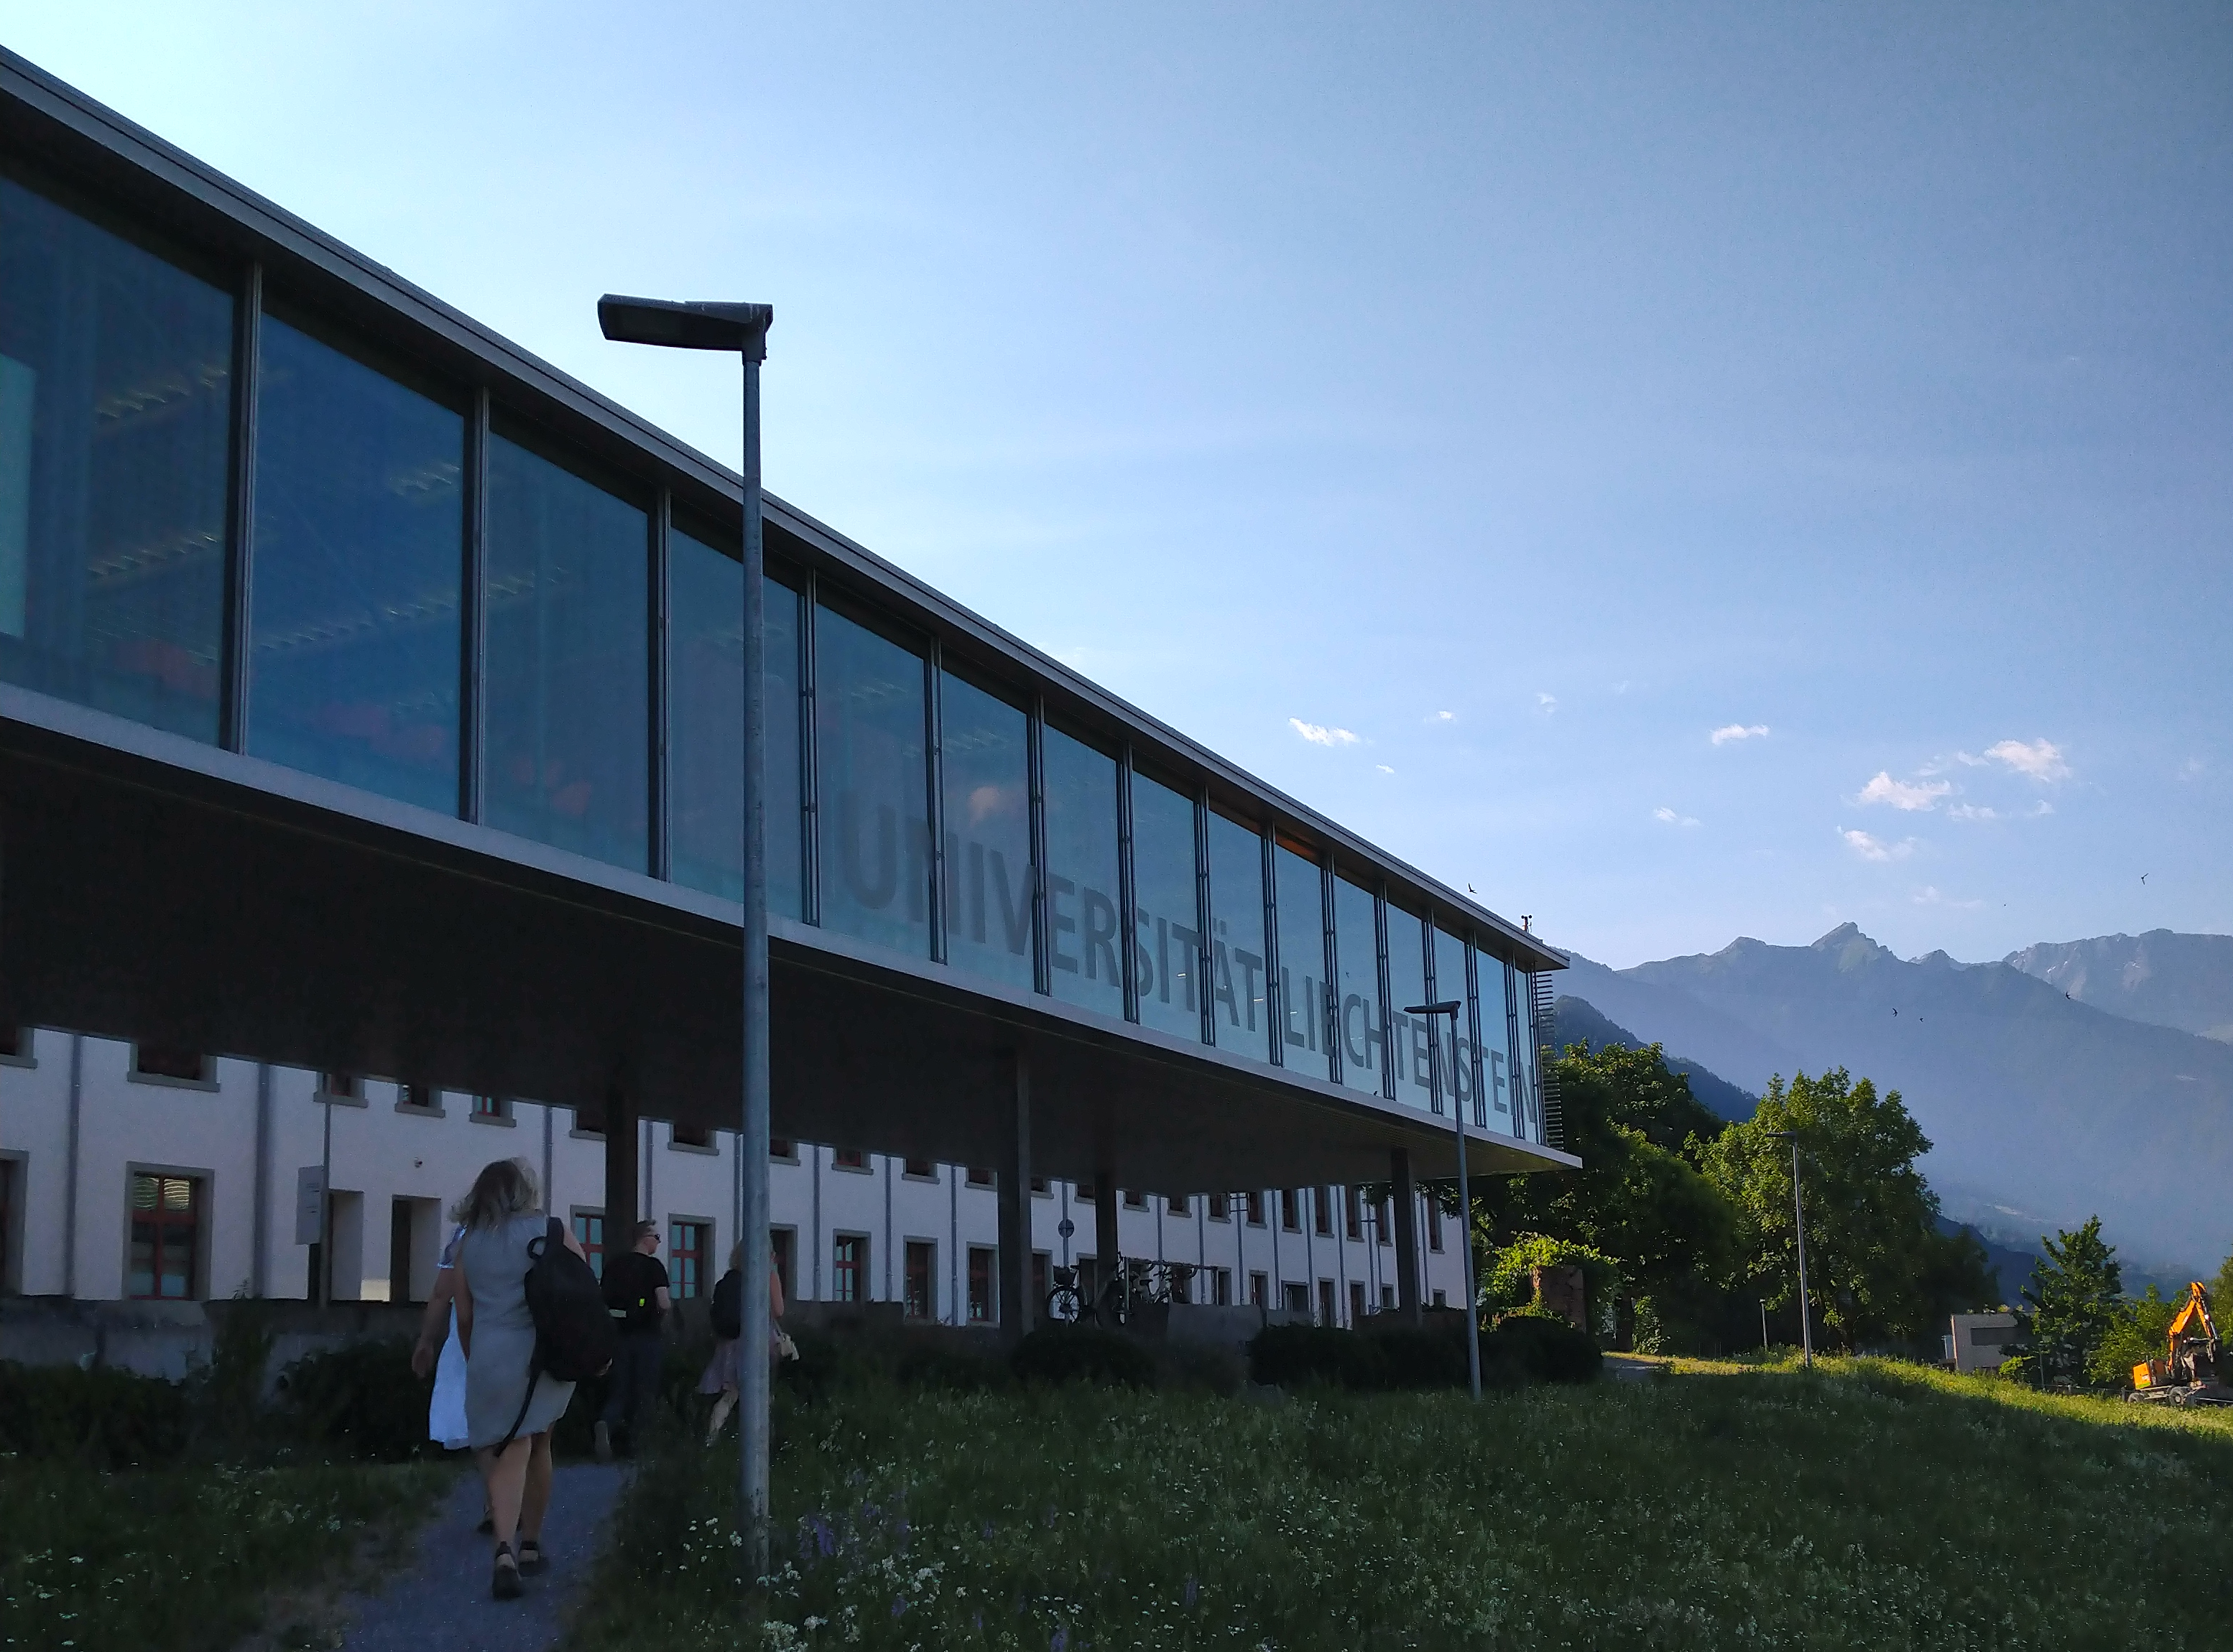 Project meeting at the University of Liechtenstein